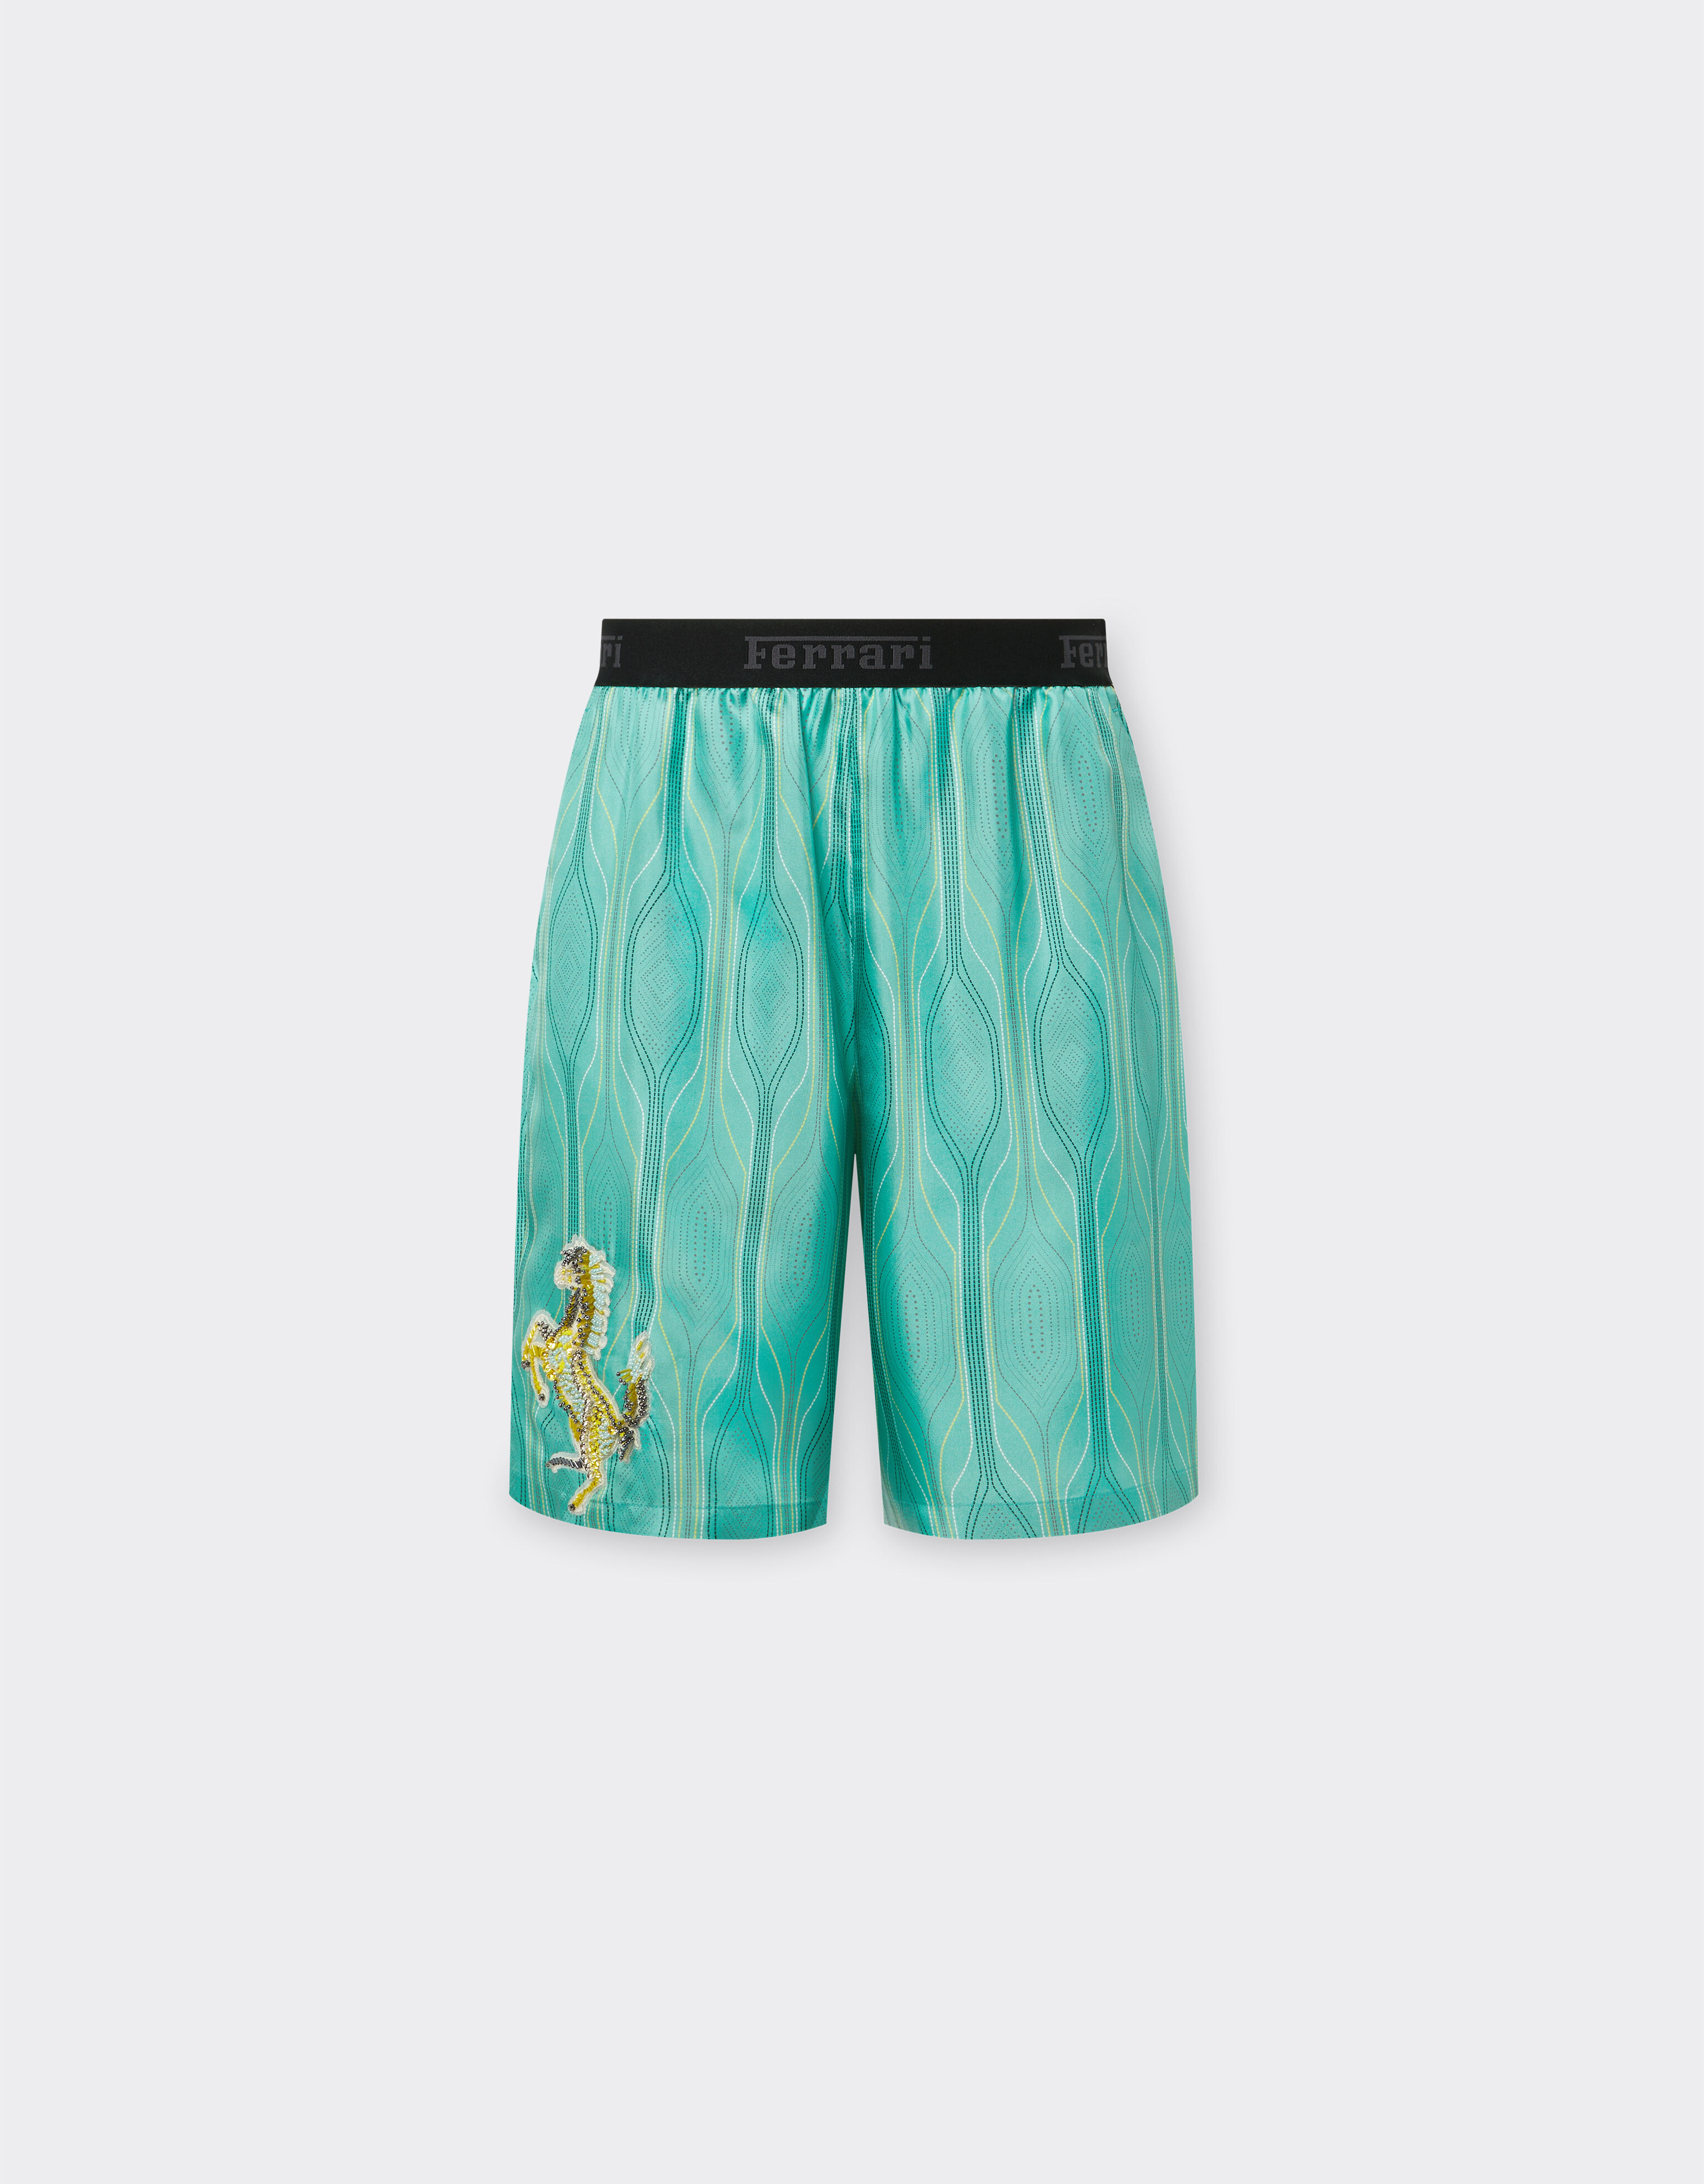 Ferrari Miami Collection silk shorts Aquamarine 21253f